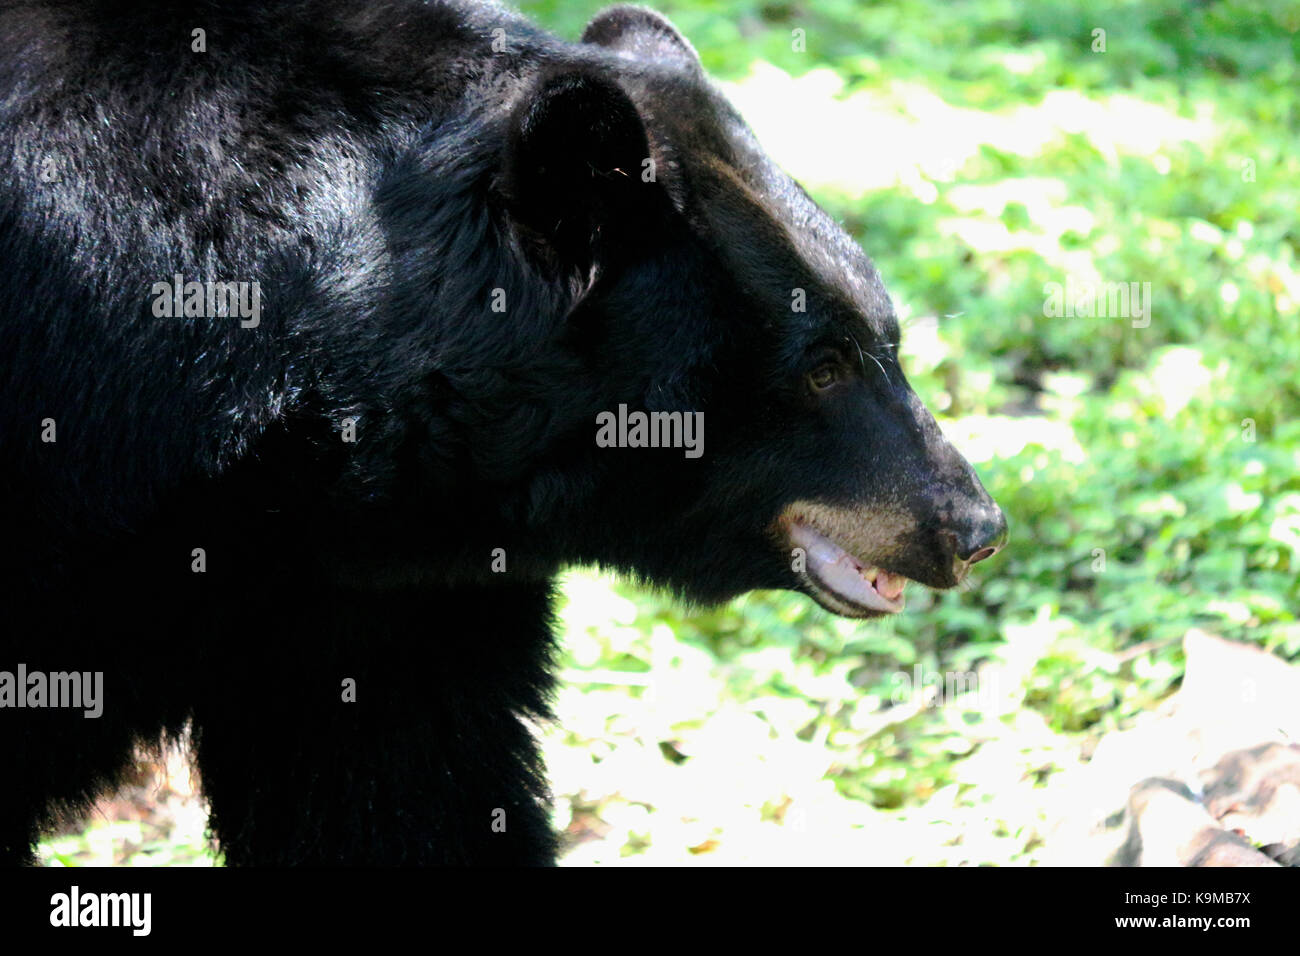 A black bear walking through the grass. Stock Photo